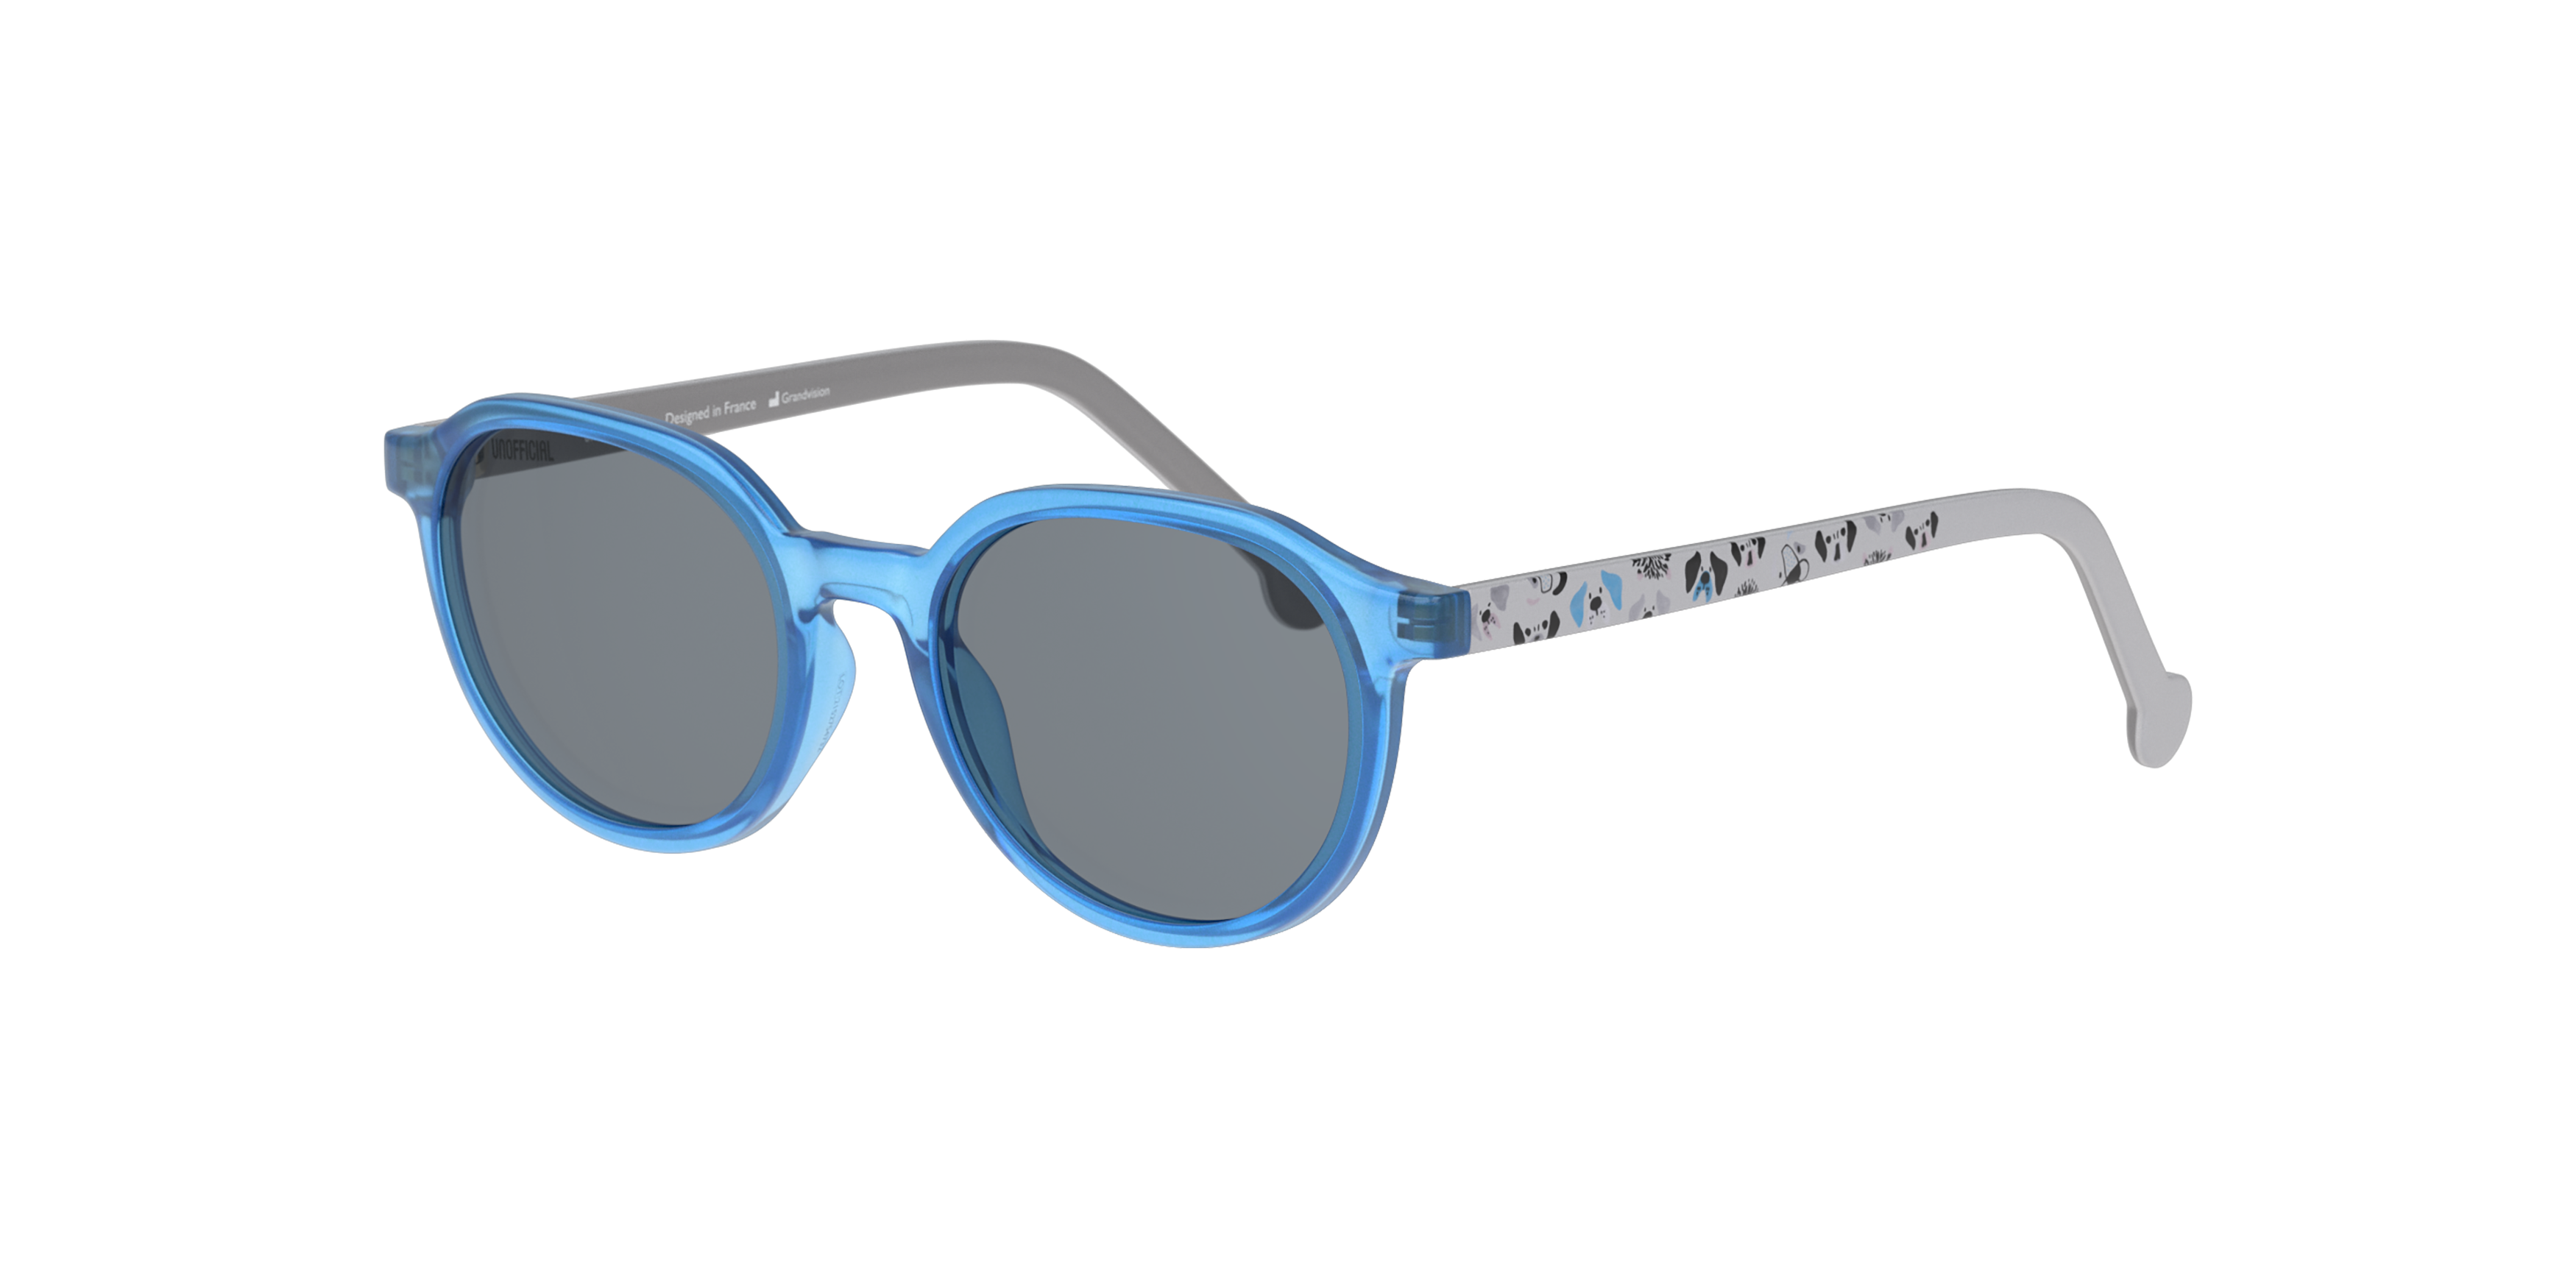 Angle_Left01 Unofficial UNSK0039 Children's Sunglasses Grey / Transparent, Blue